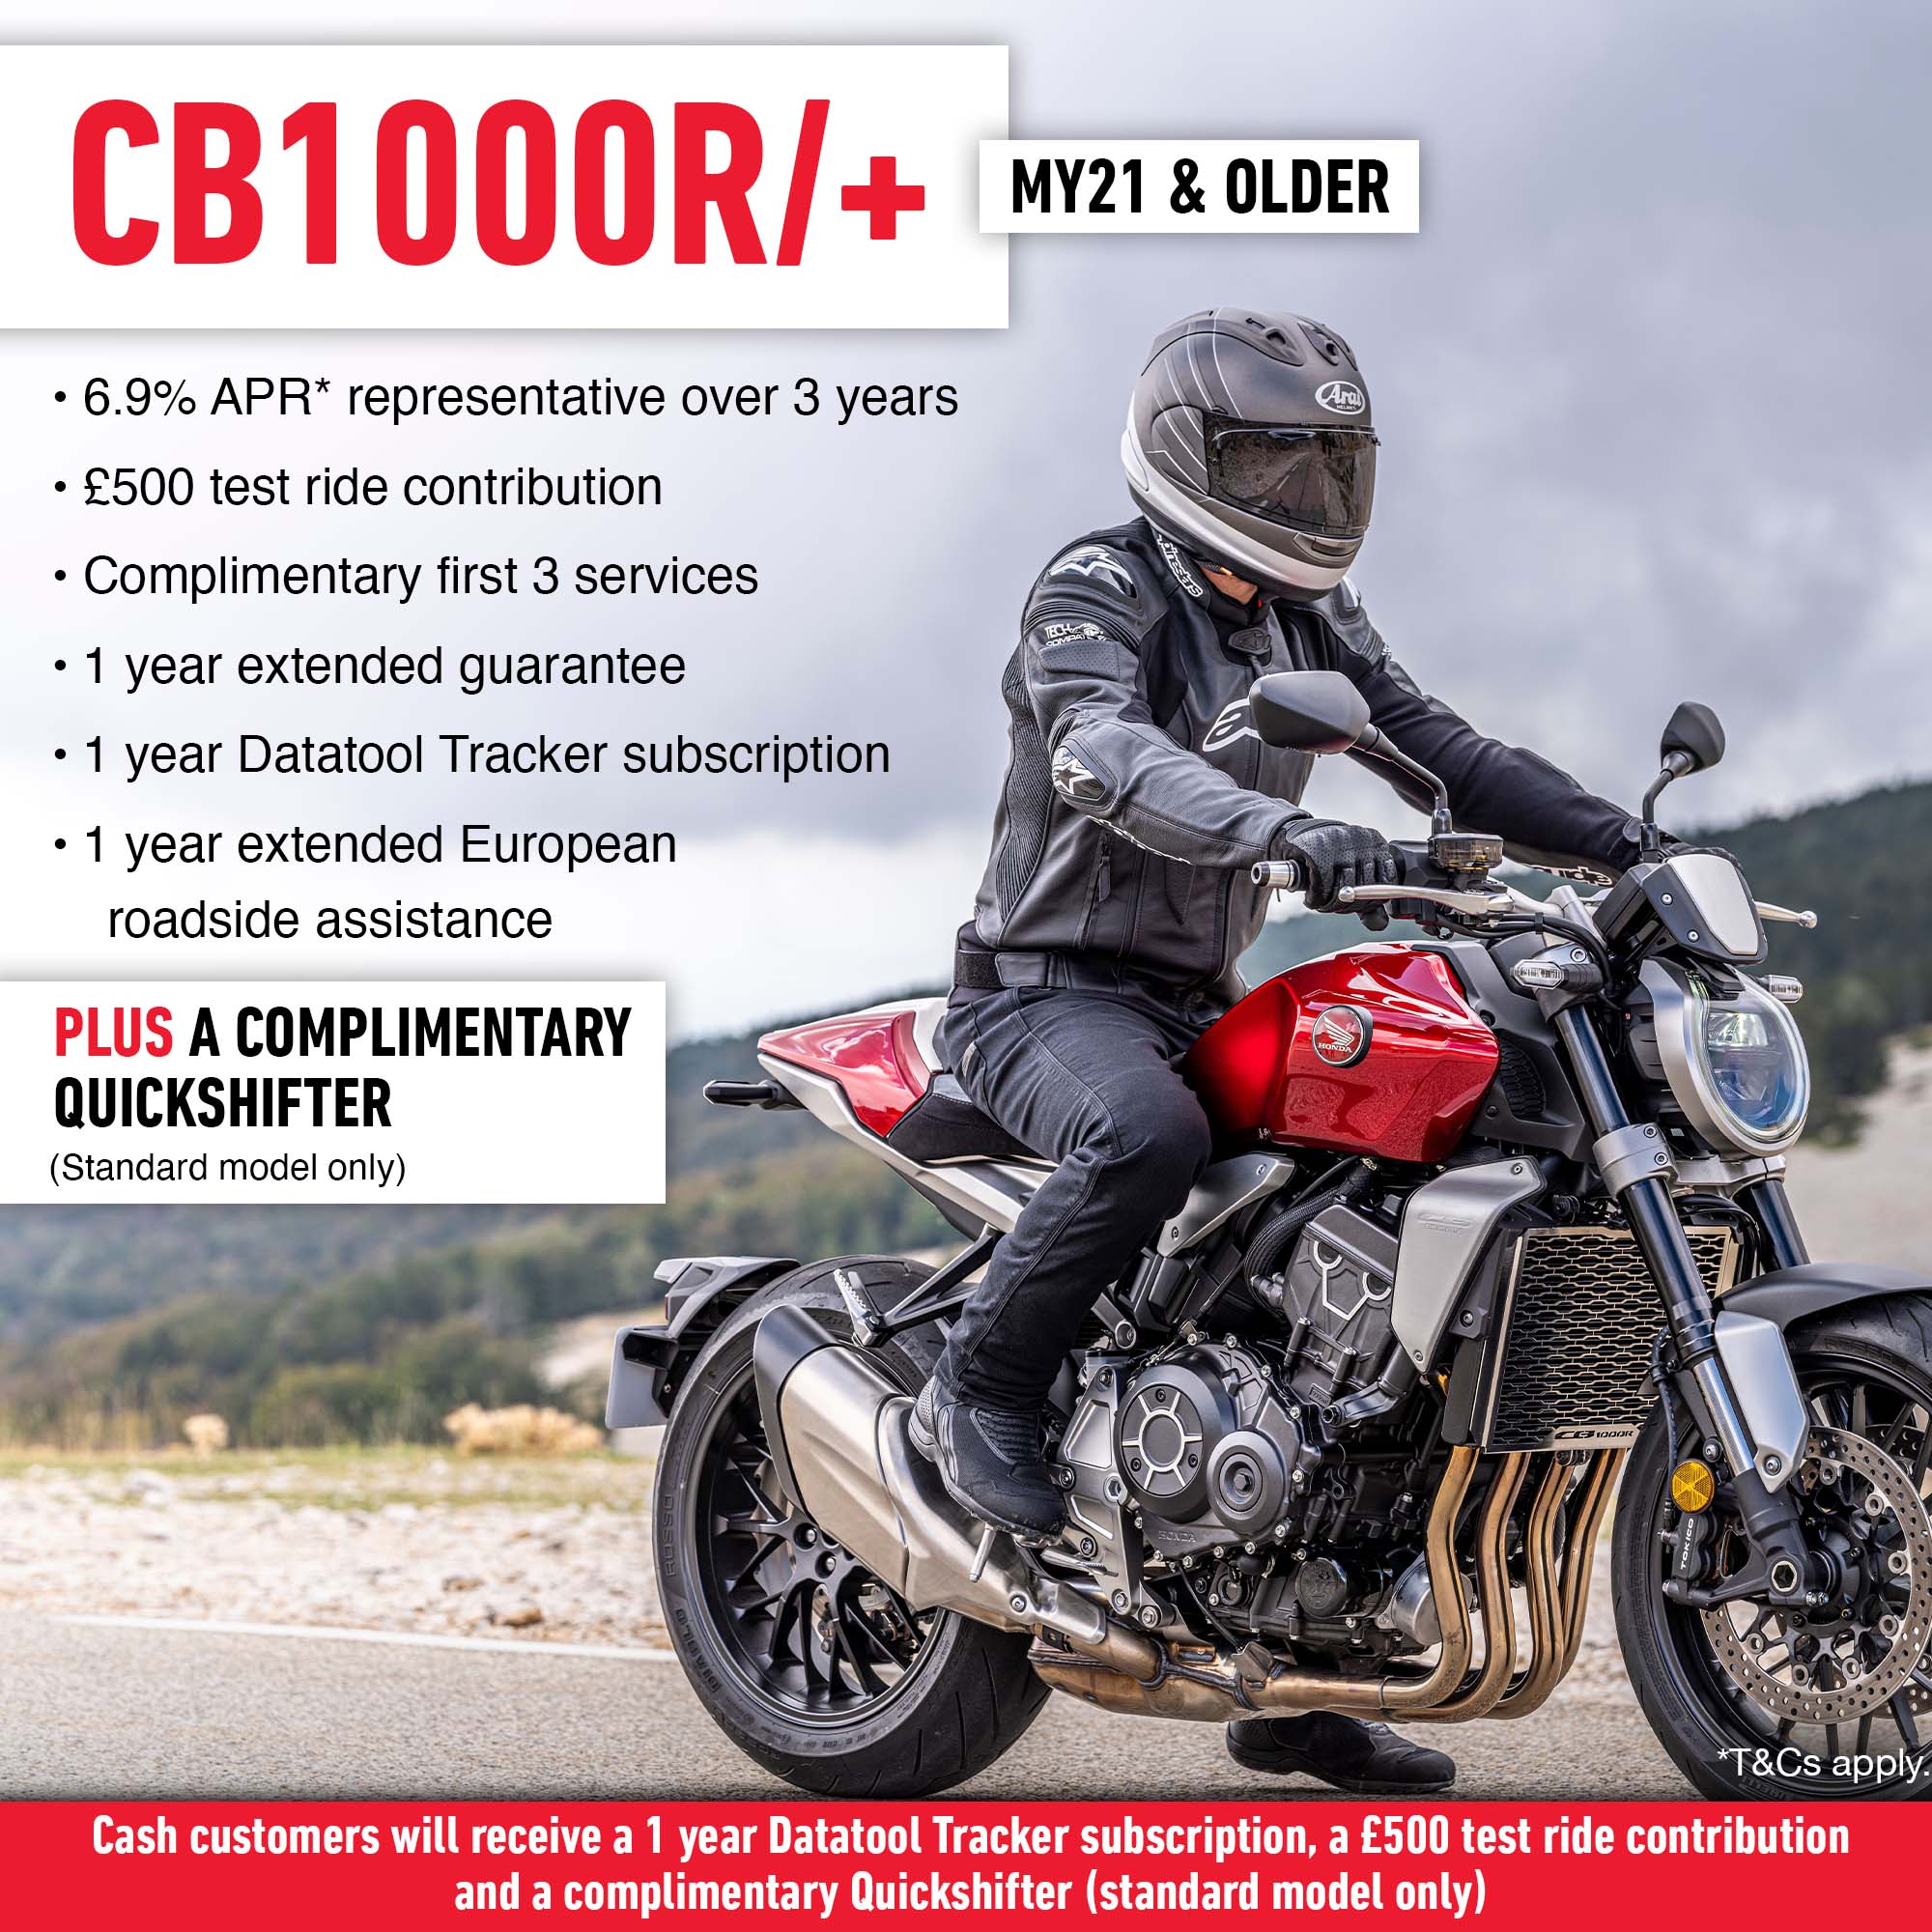 Brand new Honda finance offers on the CB1000R